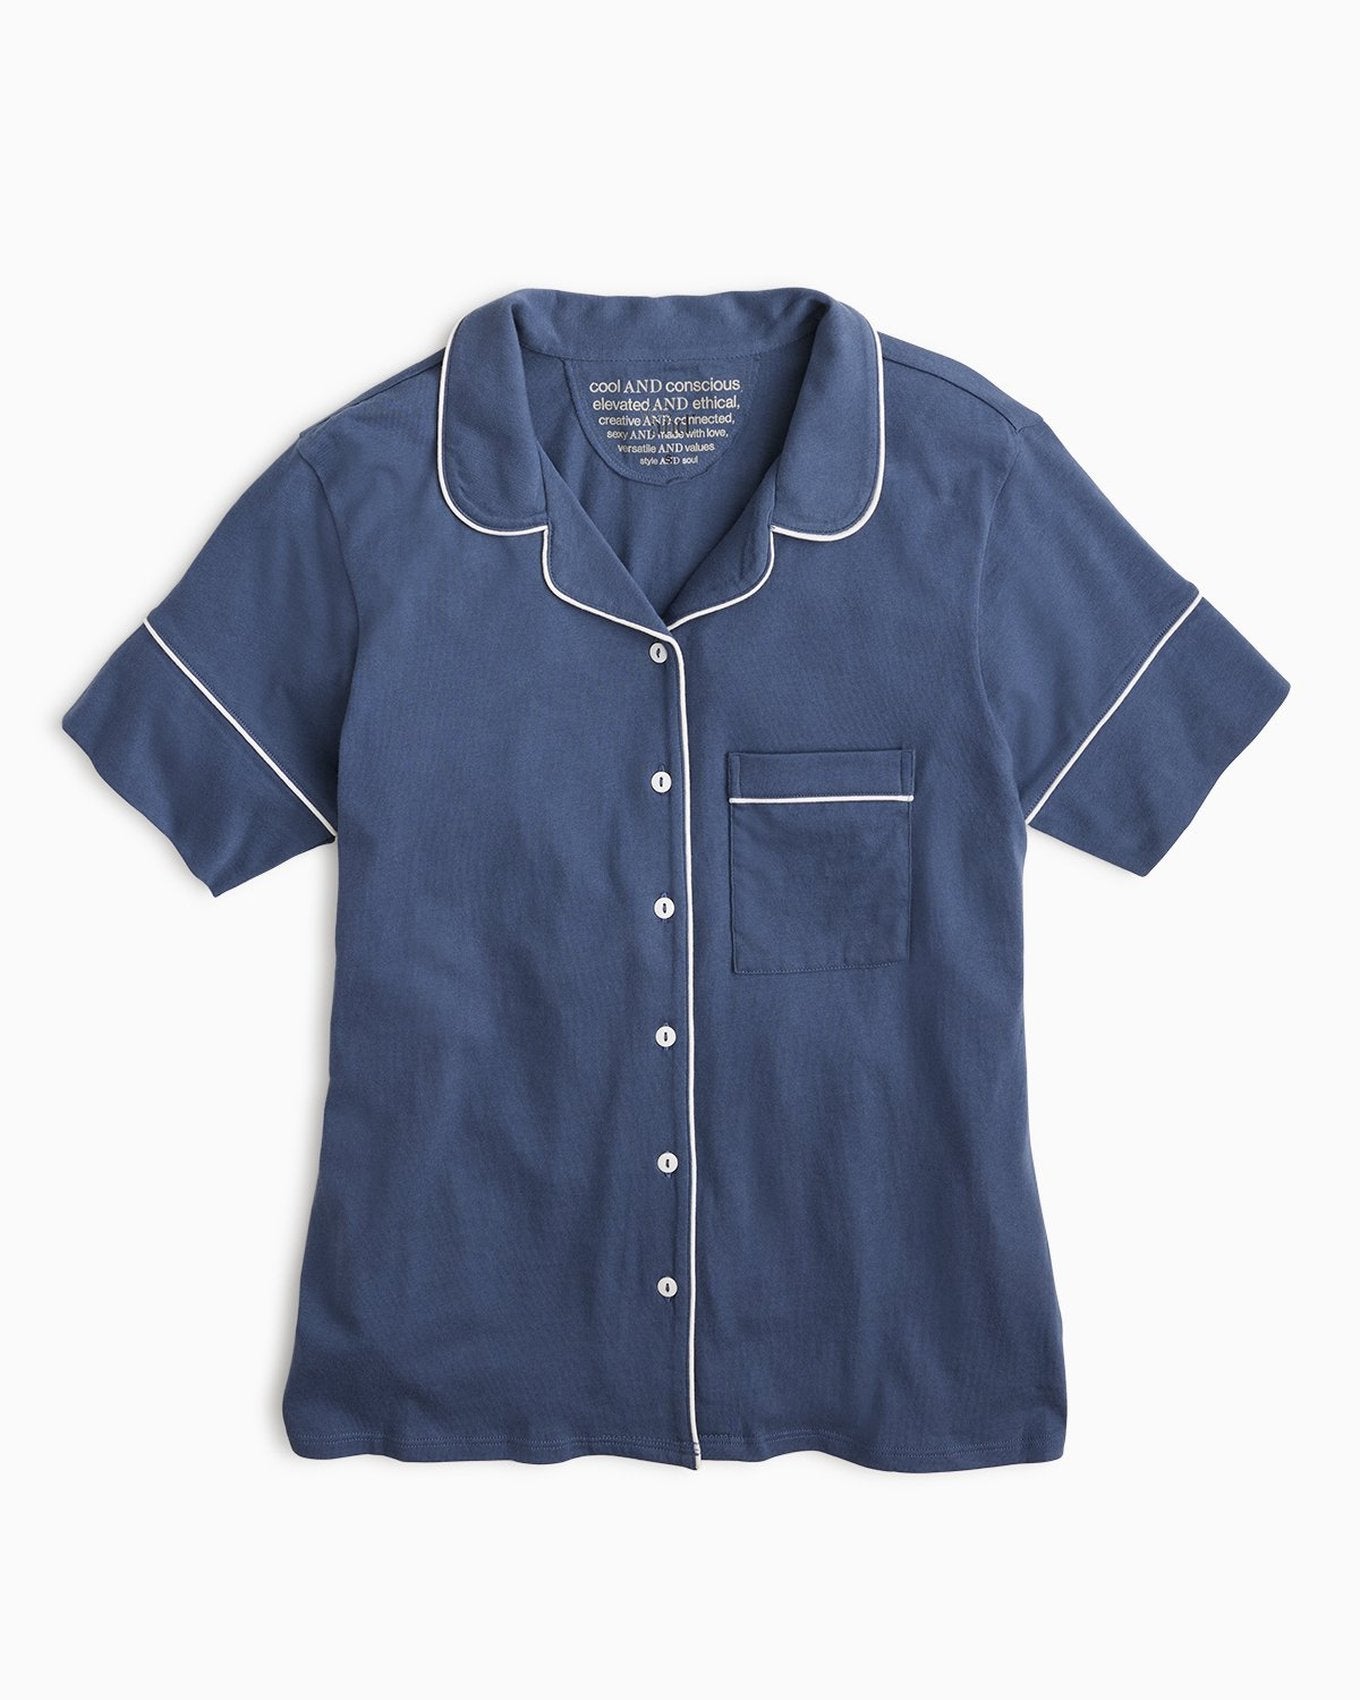 YesAnd Organic Short Sleeve Sleep Shirt Sleep Shirt in color Bering Sea and shape shirt